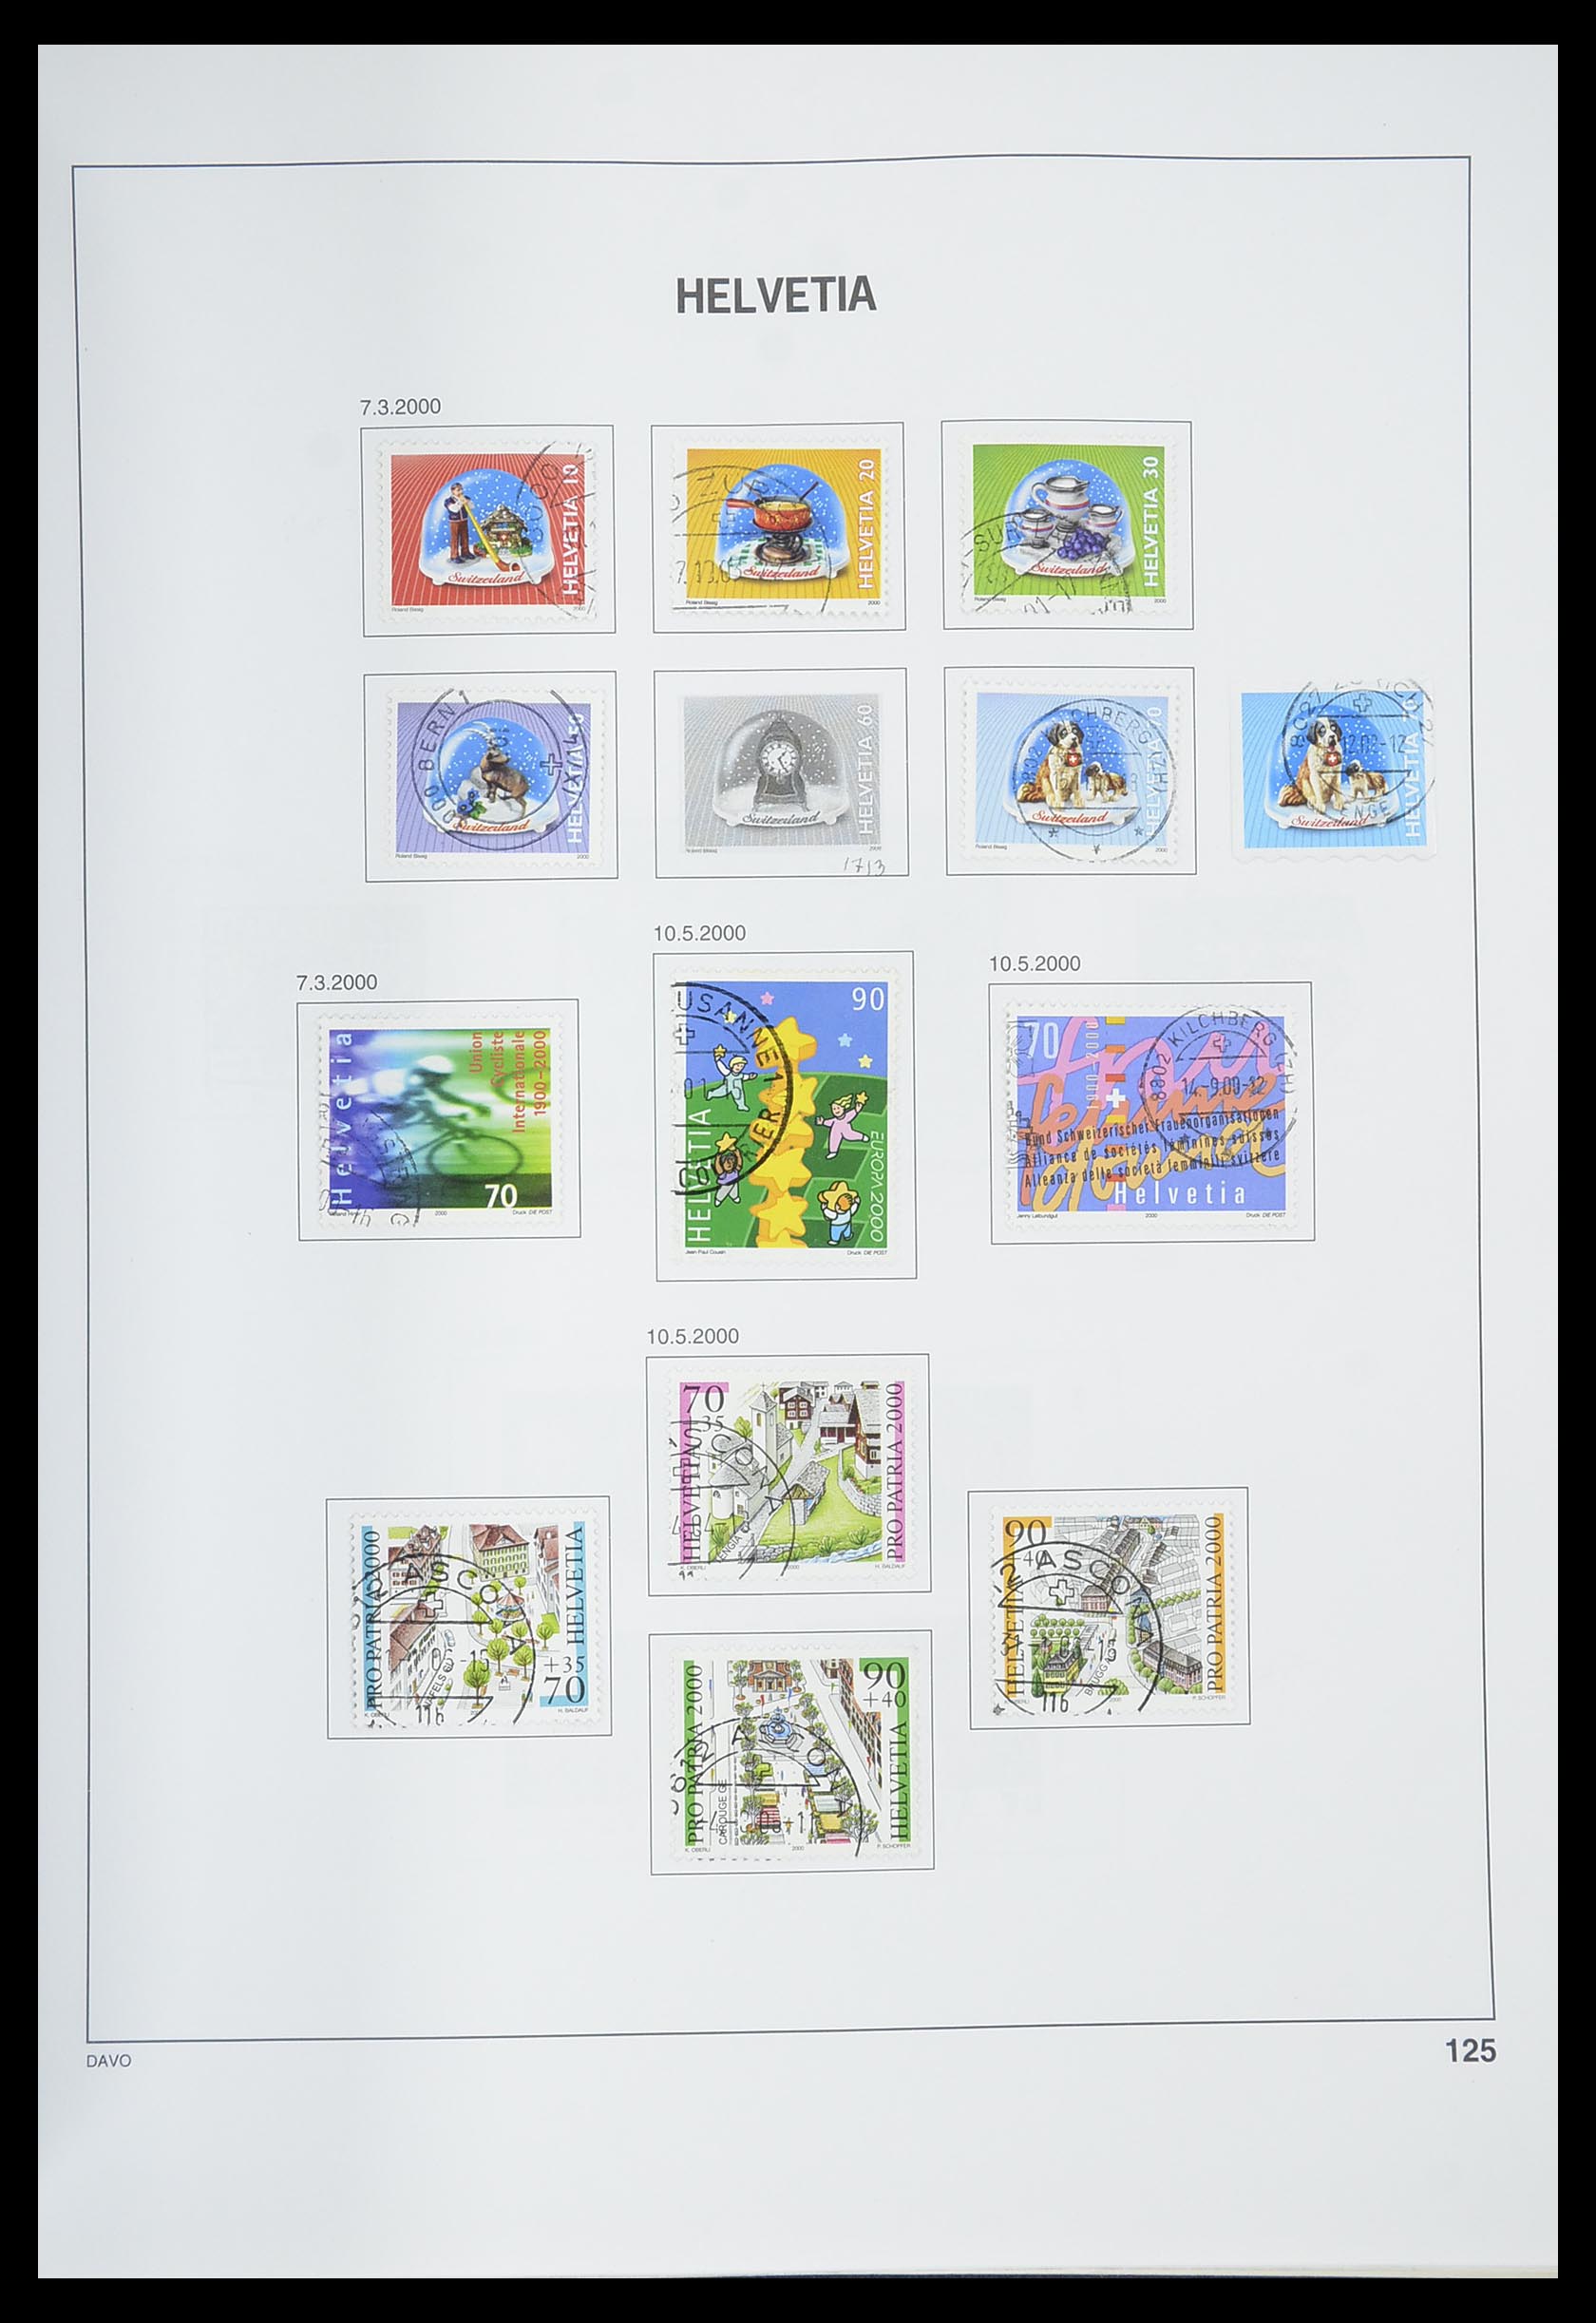 33559 126 - Stamp collection 33559 Switzerland 1850-2000.